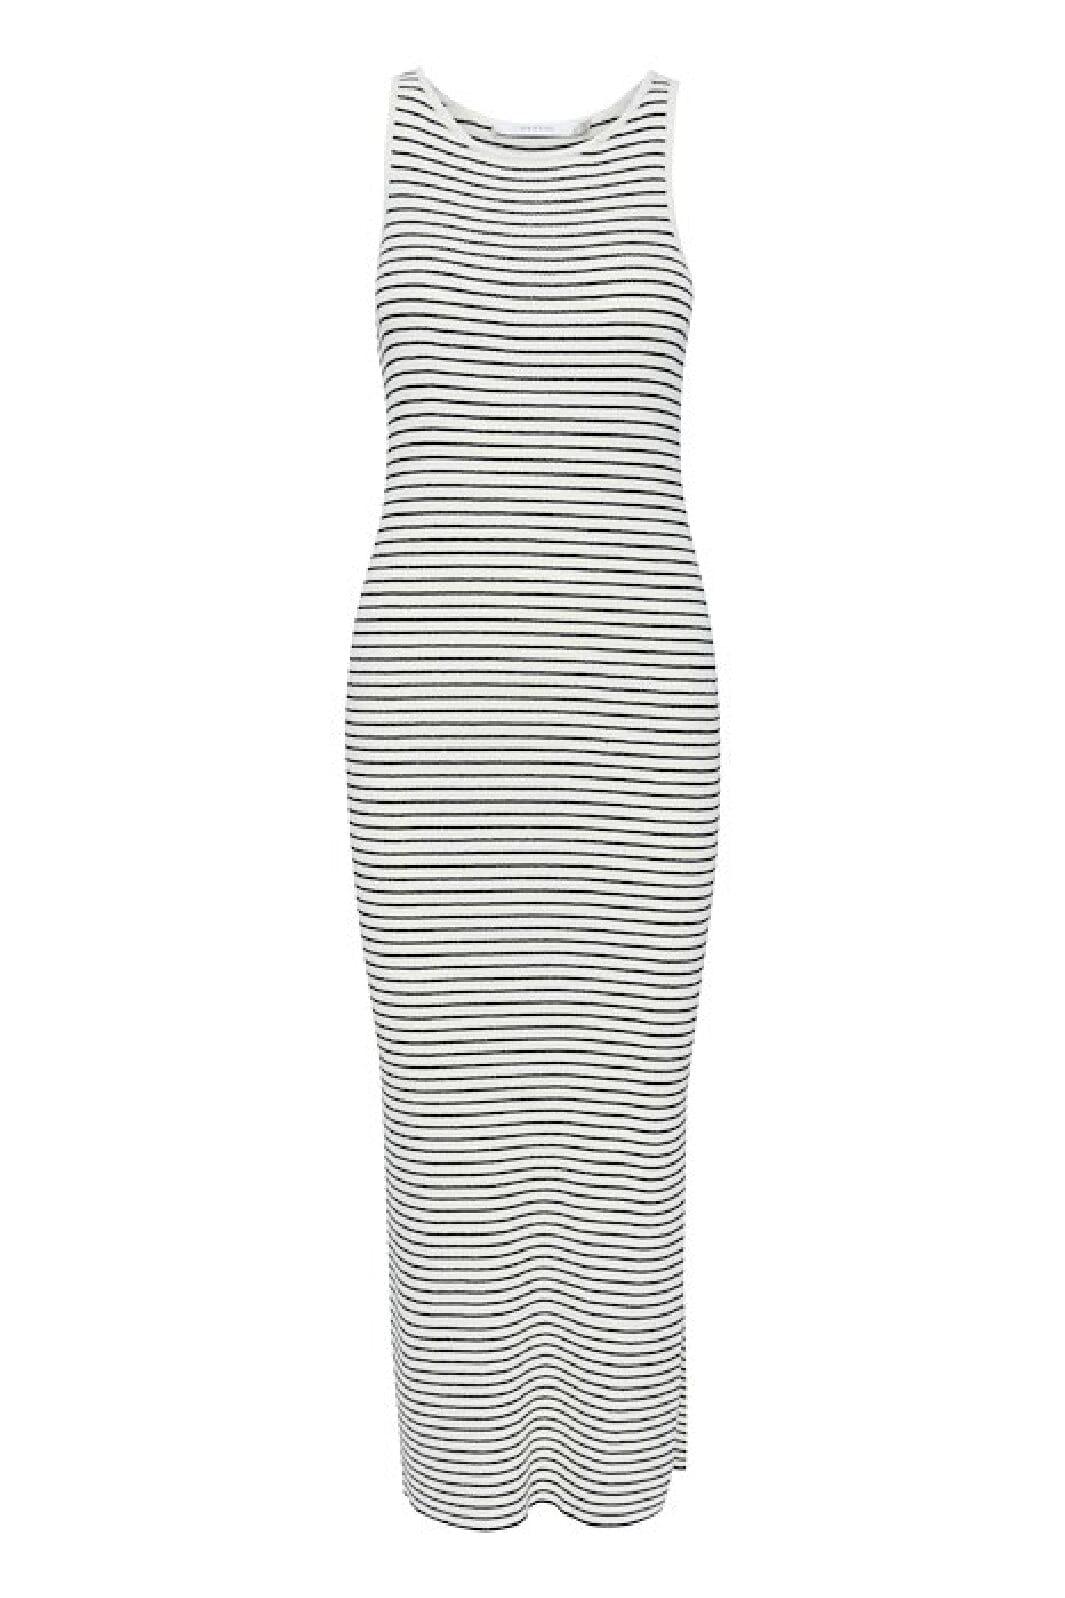 Gestuz - Stinagz Dress - 106050 Afterglow/Black Striped Kjoler 